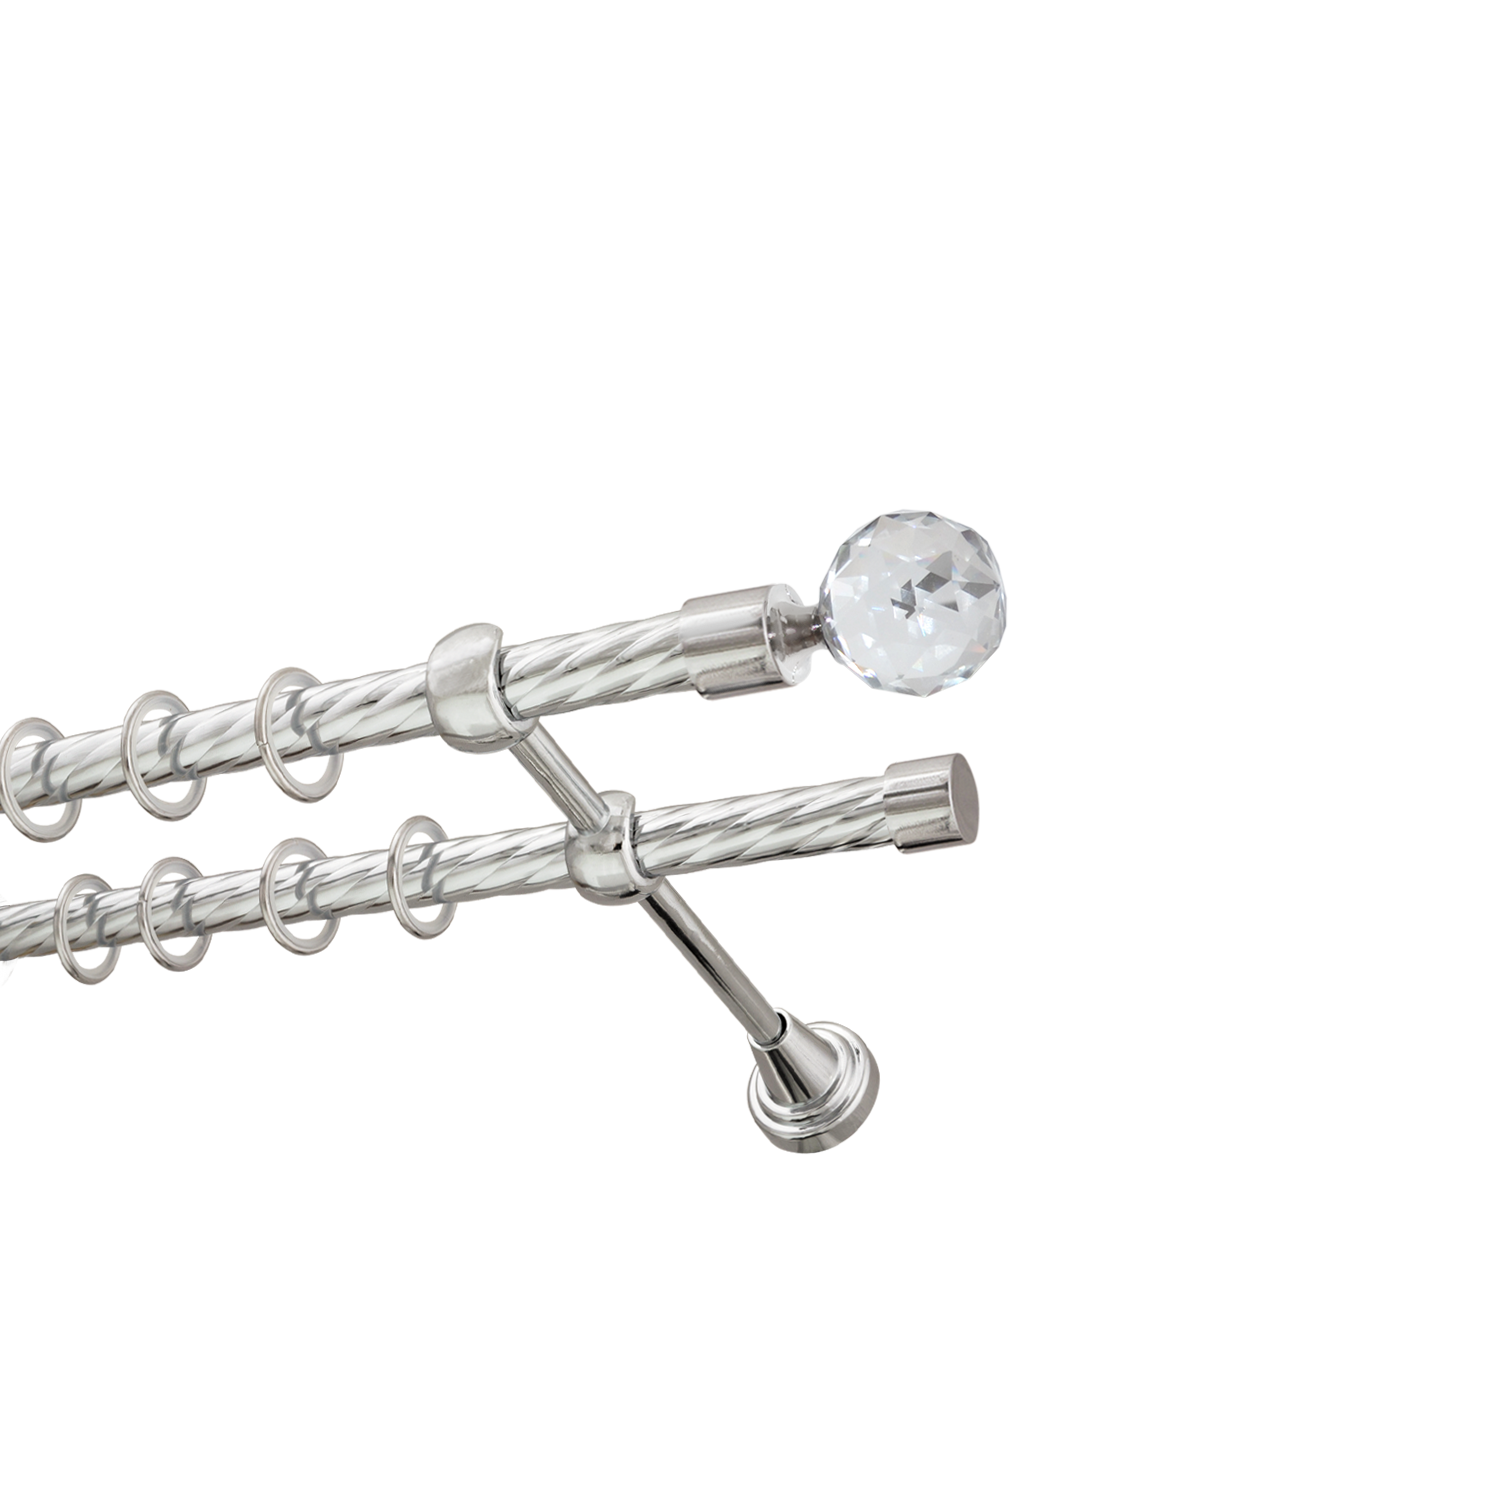 Металлический карниз для штор Карат, двухрядный 16/16 мм, серебро, витая штанга, длина 140 см - фото Wikidecor.ru